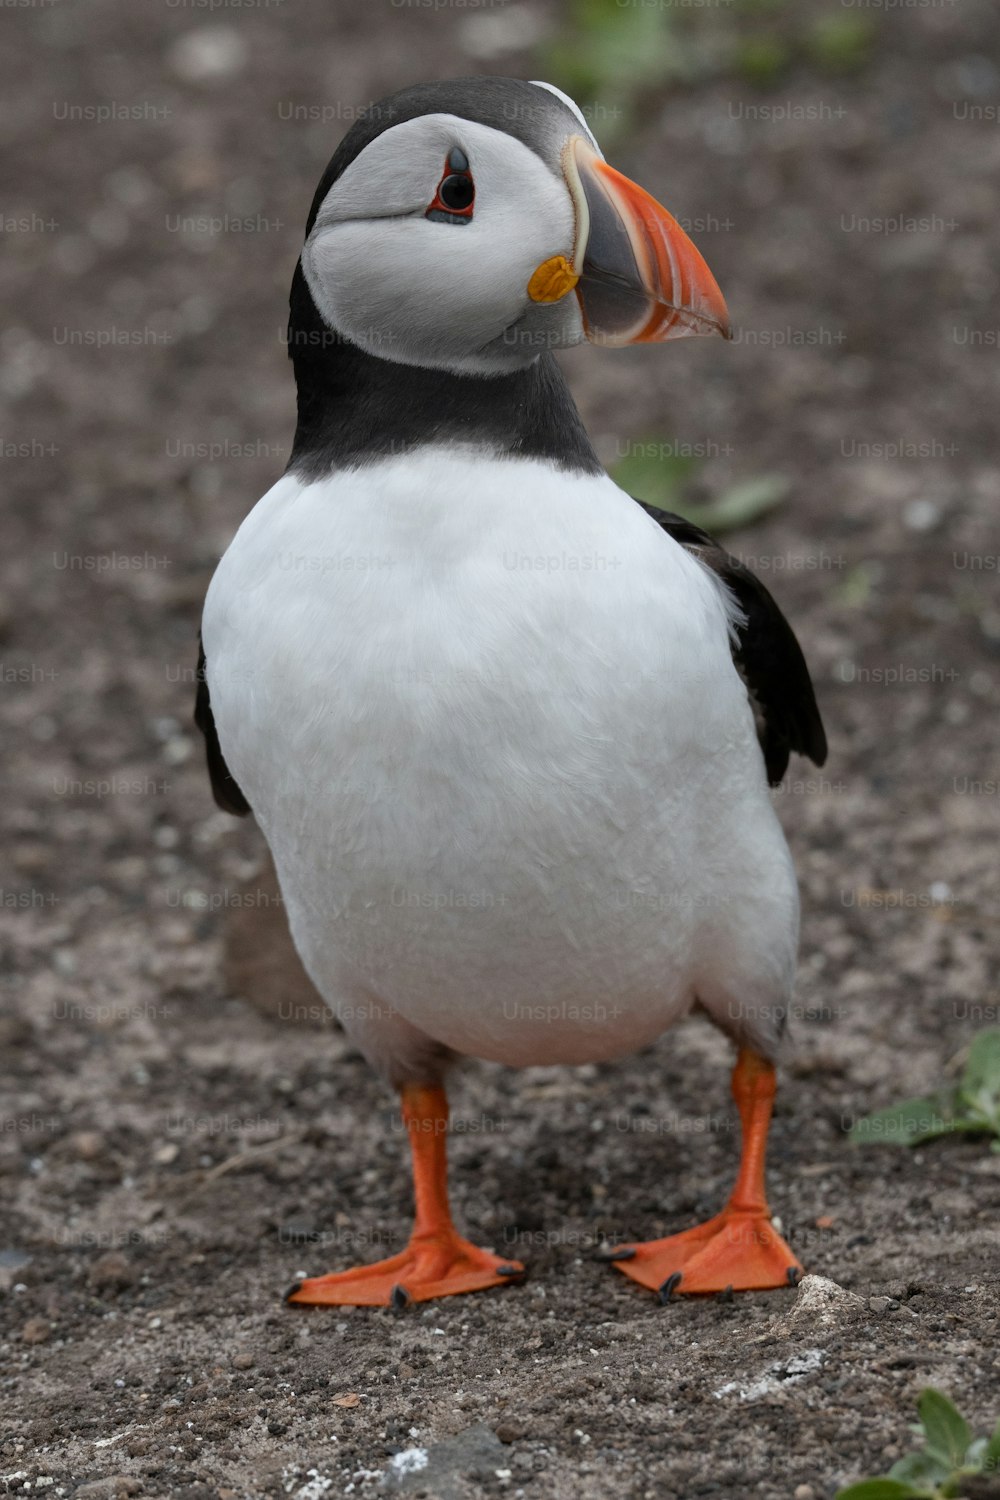 a black and white bird with an orange beak